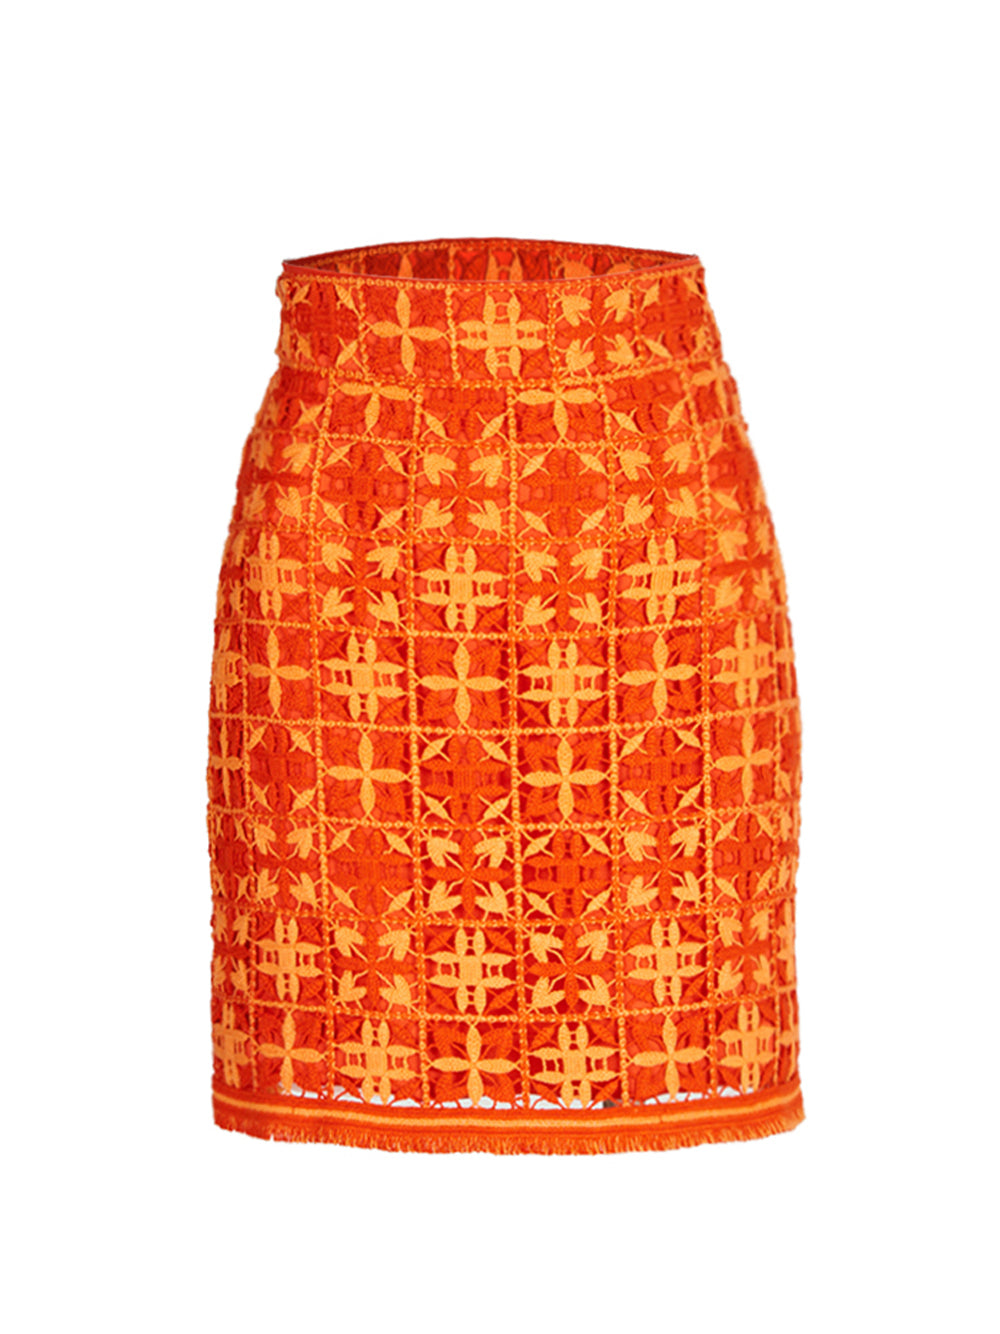 Idalia Skirt (Red Orange Crochet)